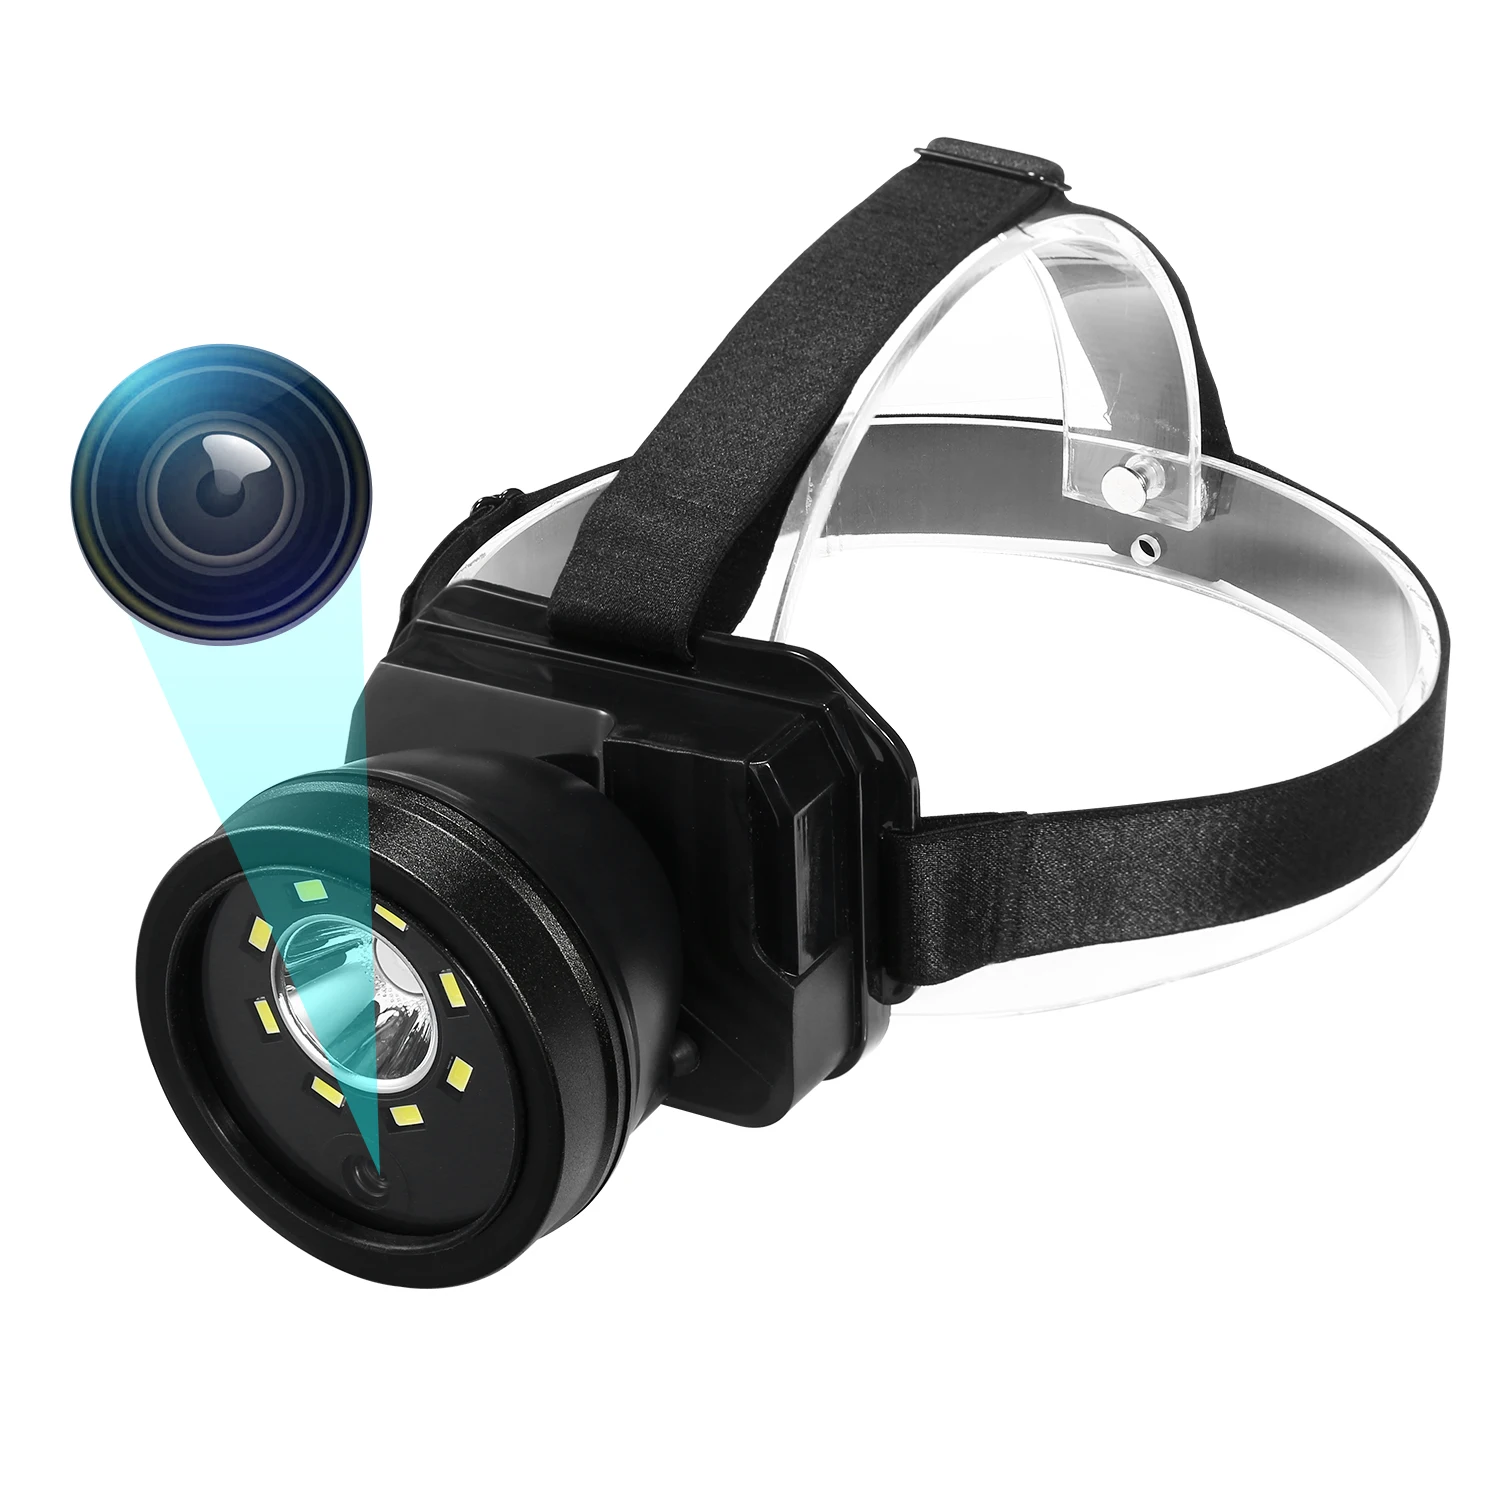 

HD1080P LED Headlamp Headlight Video Camcorder Waterproof Super Bright Outdoor Sport Video Recorder Camera Hidden Spy Camera